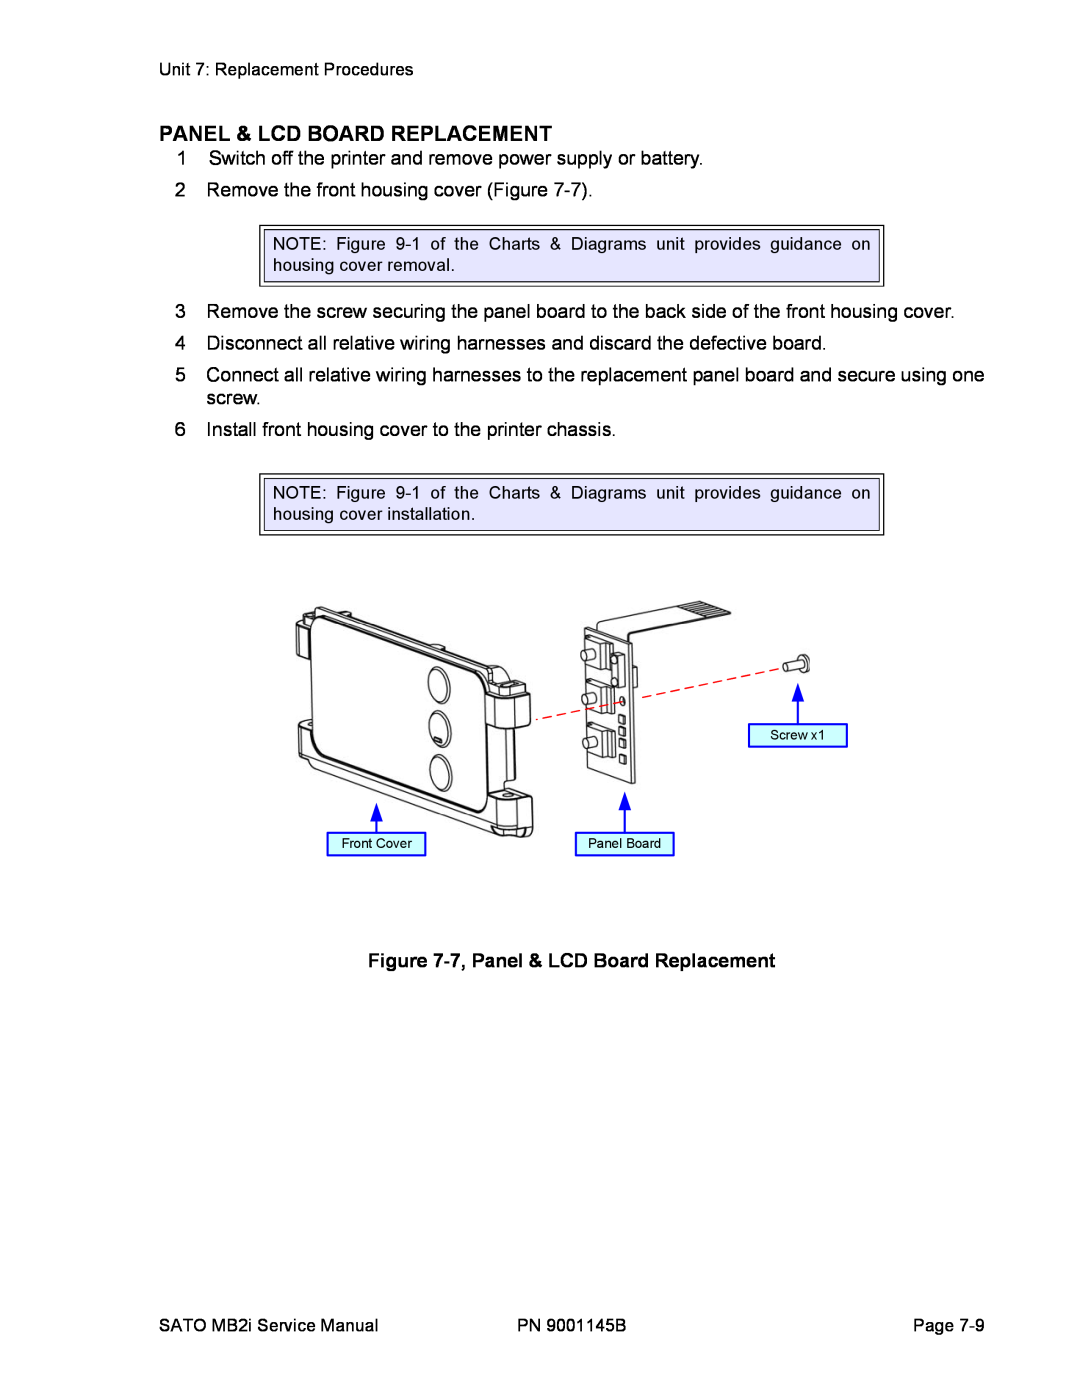 SATO 200i manual Panel & Lcd Board Replacement, 7, Panel & LCD Board Replacement 